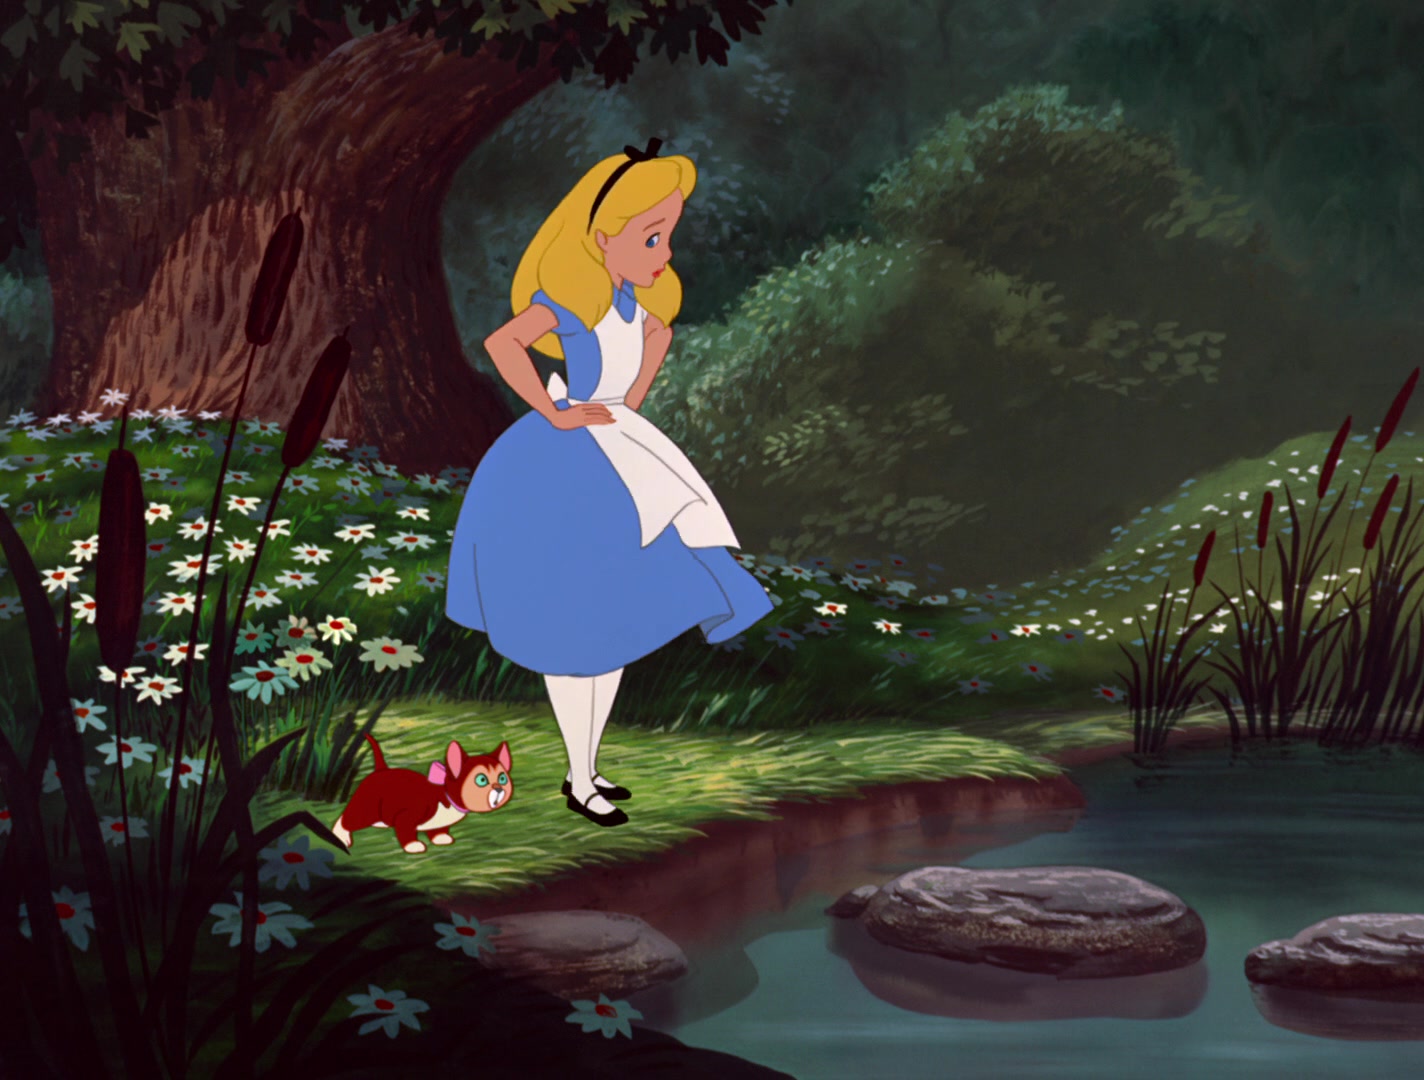 Alice in Wonderland download the last version for windows